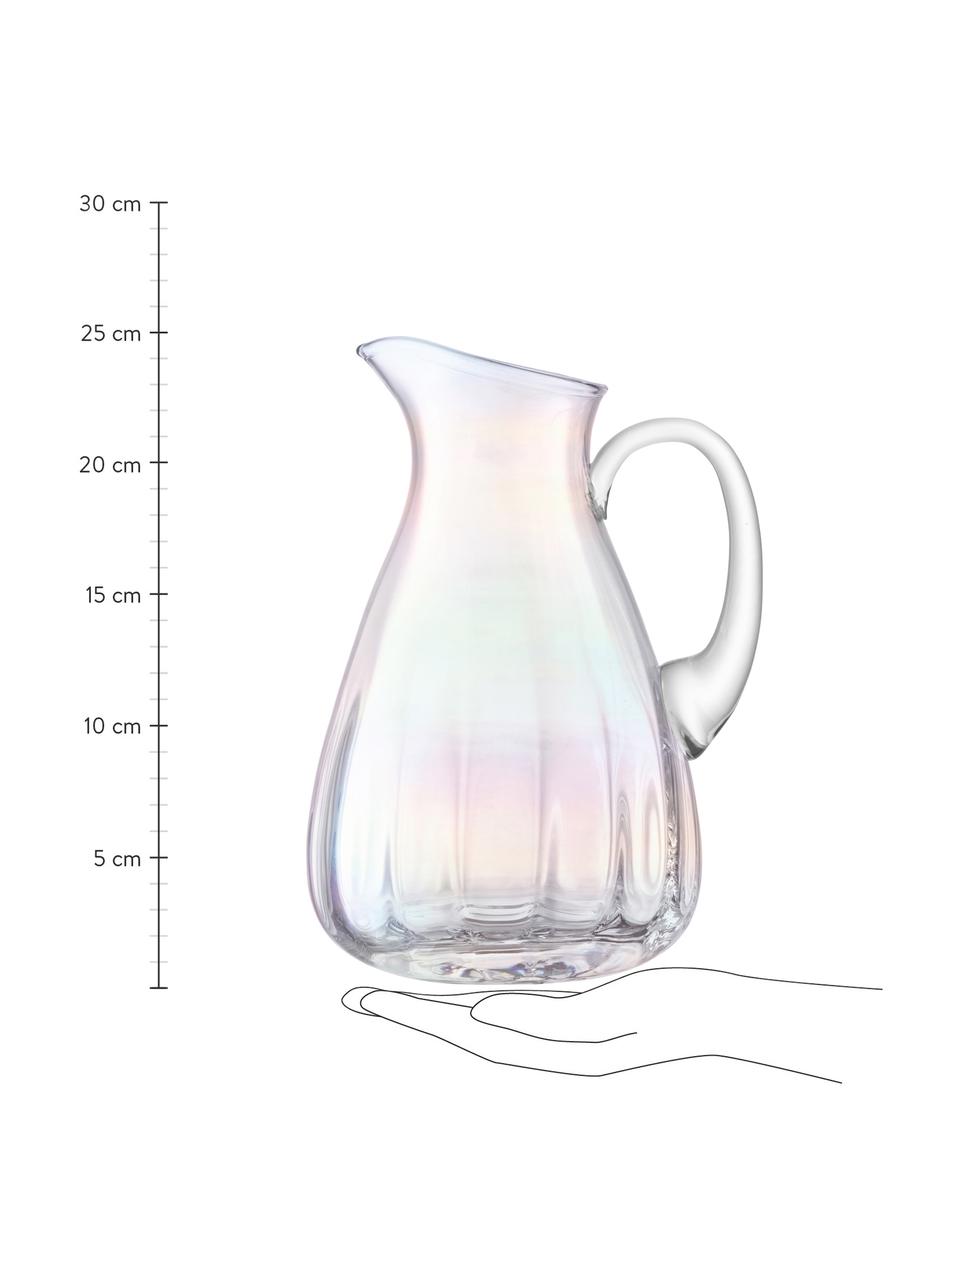 Mundgeblasener Krug Pearl mit schimmerndem Perlmuttglanz, 2.2 L, Glas, Perlmutt-Schimmer, H 25 cm, 2.2 L